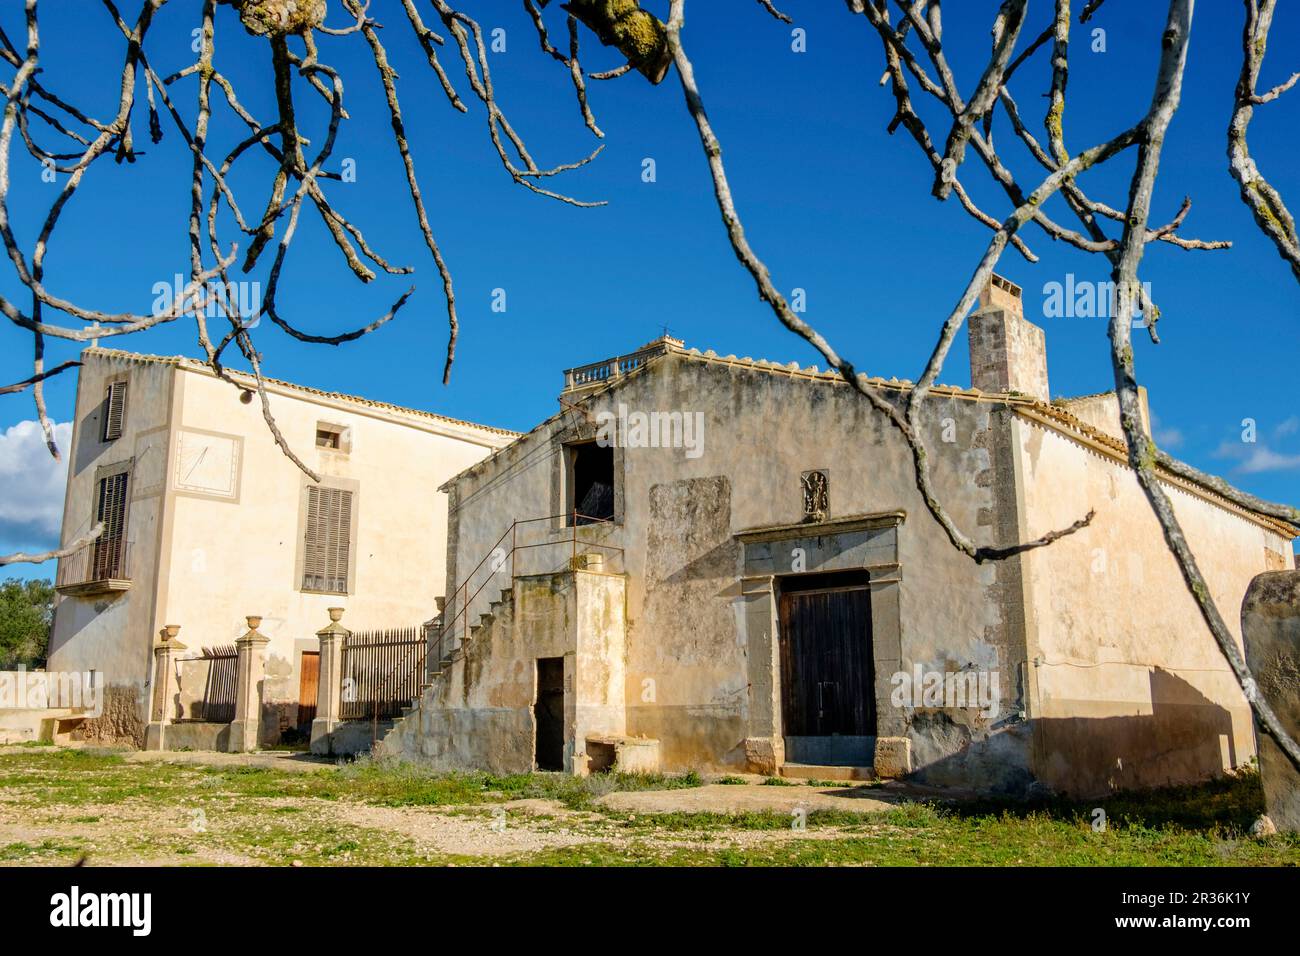 Son Noguera, Llucmajor, Mallorca, balearic islands, Spain. Stock Photo